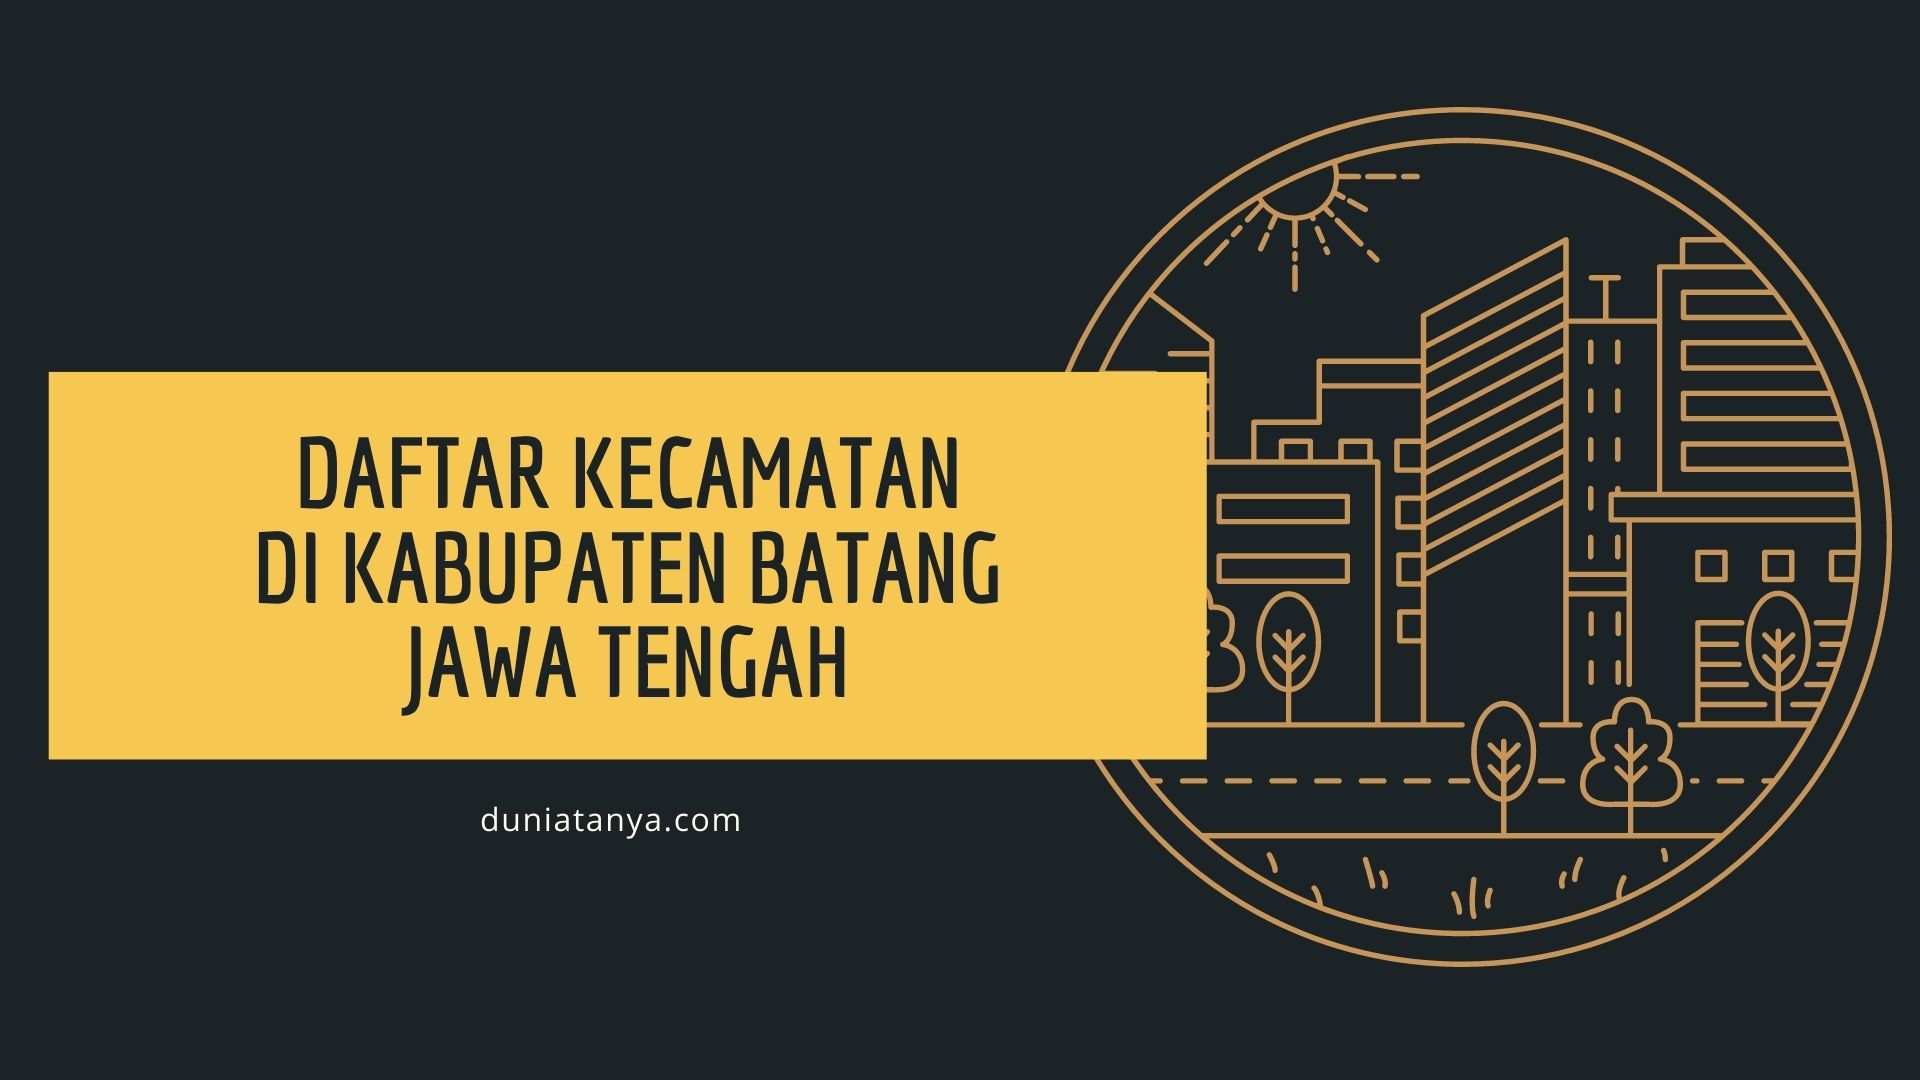 You are currently viewing Daftar Kecamatan Di Kabupaten Batang,Jawa Tengah